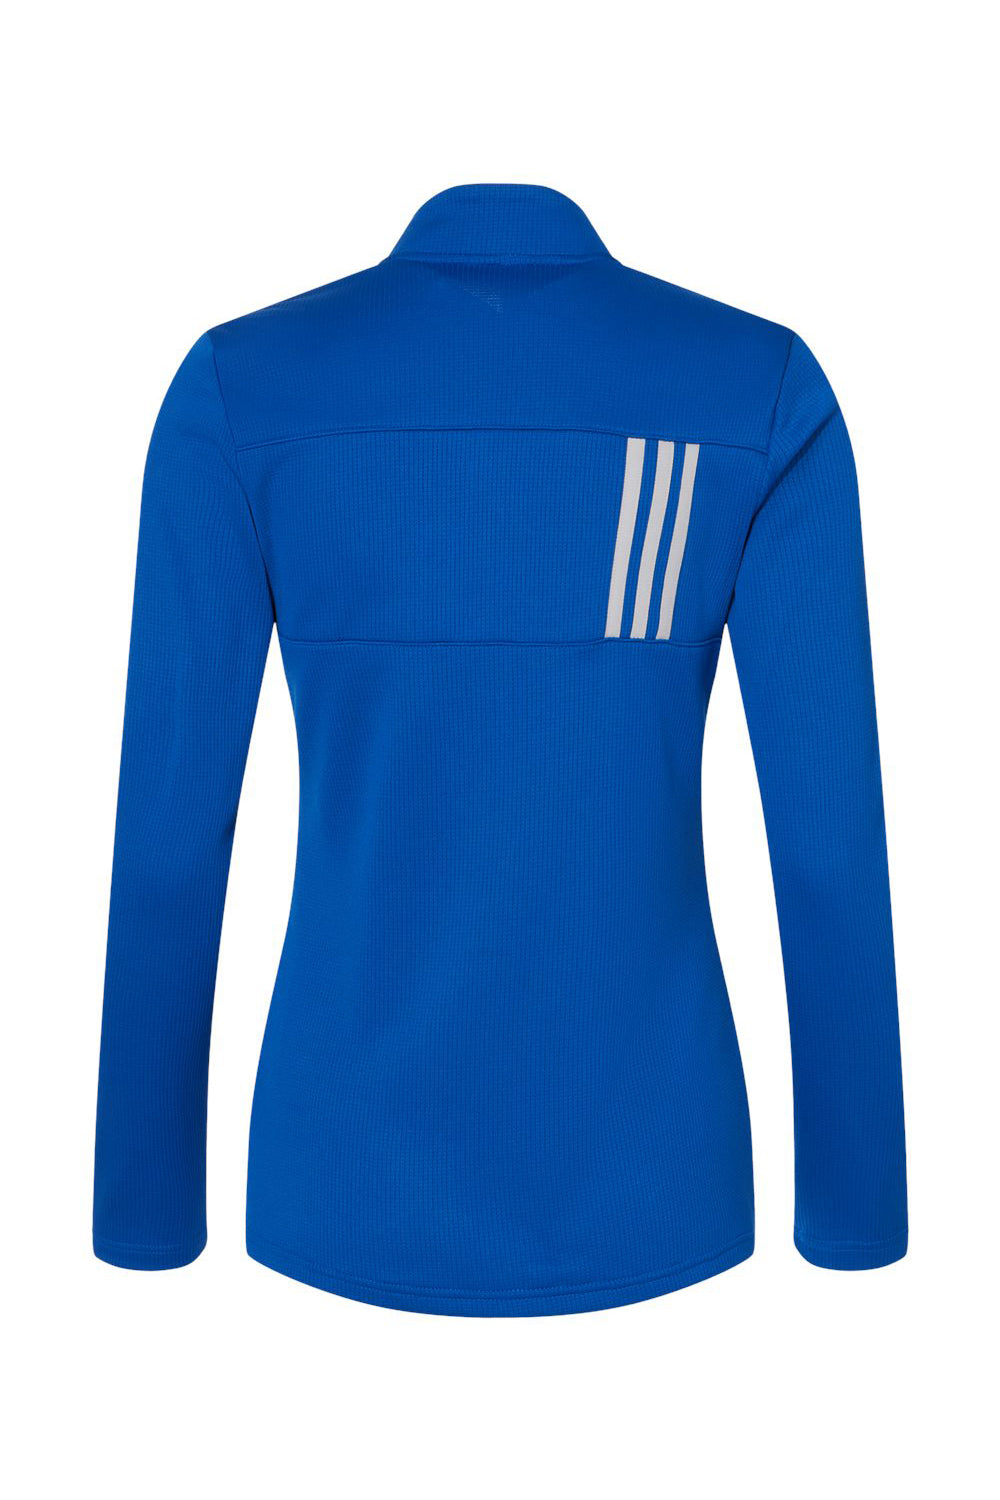 Adidas A483 Womens 3 Stripes Double Knit Moisture Wicking 1/4 Zip Sweatshirt Team Royal Blue/Grey Flat Back